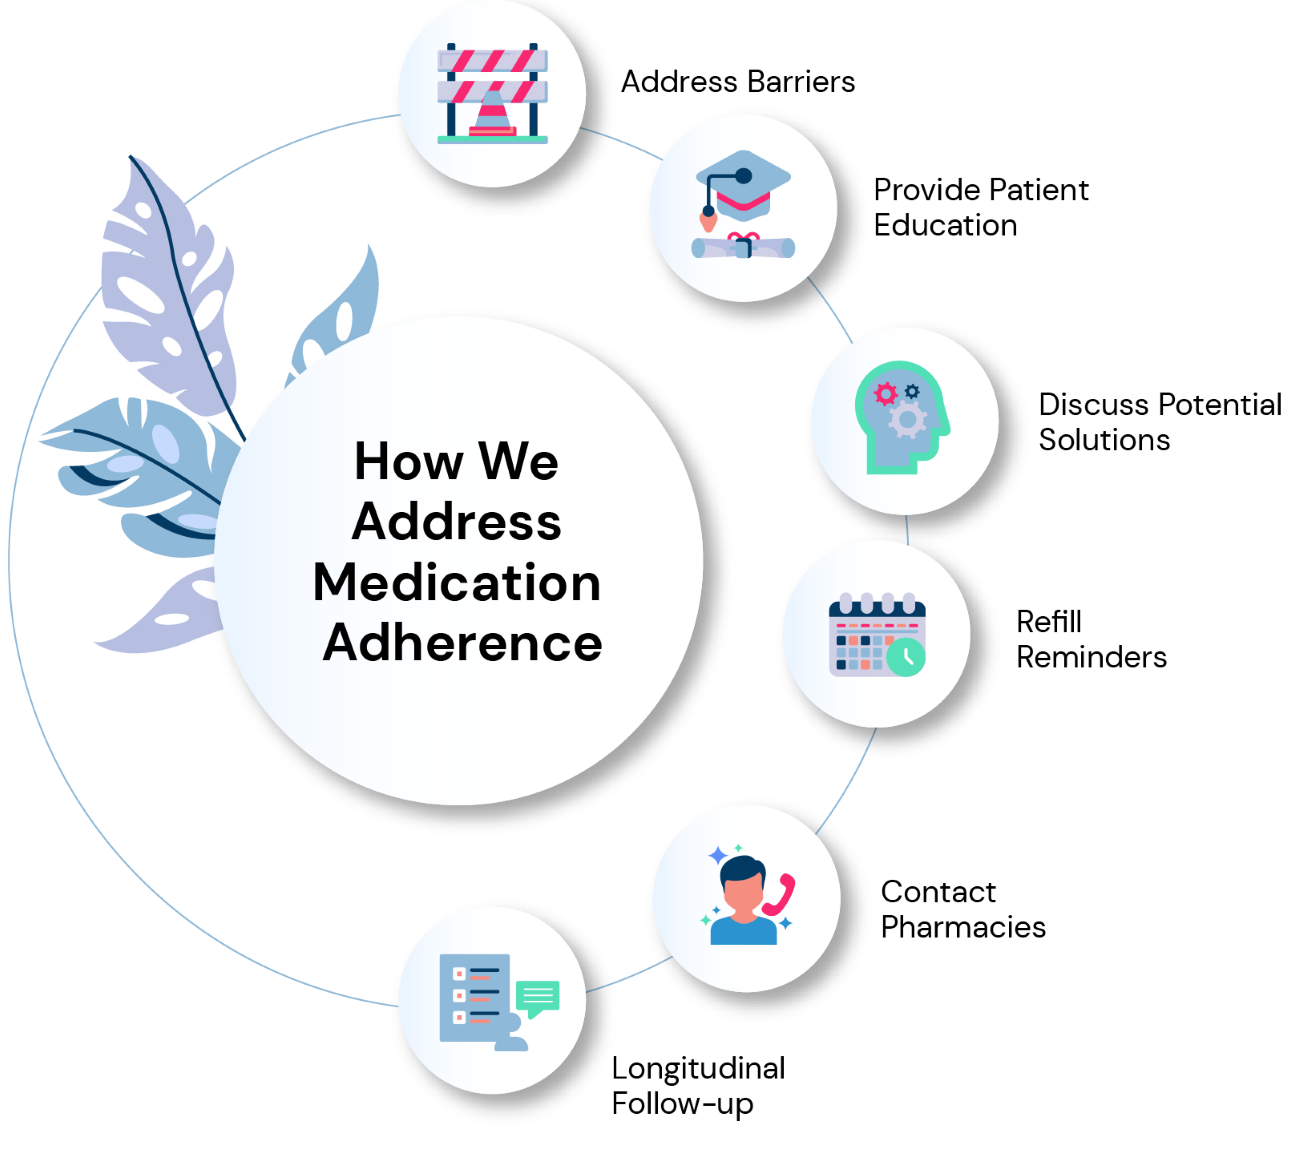 How We Address Medication Adherence